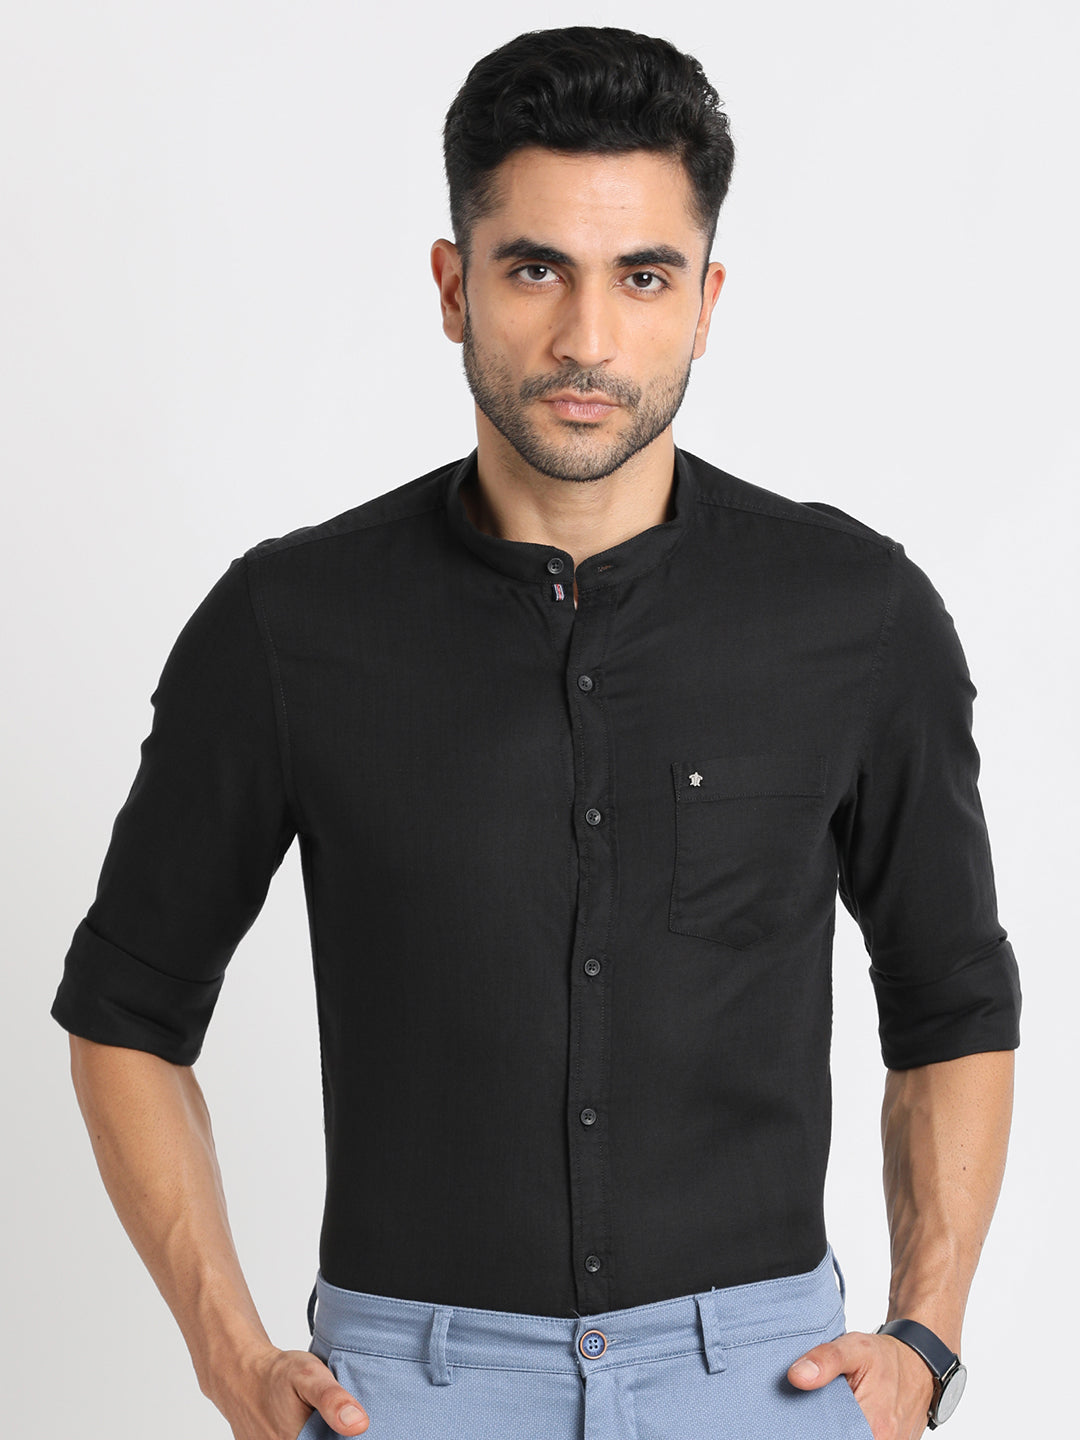 Cotton Lyocell Black Plain Slim Fit Full Sleeve Casual Shirt